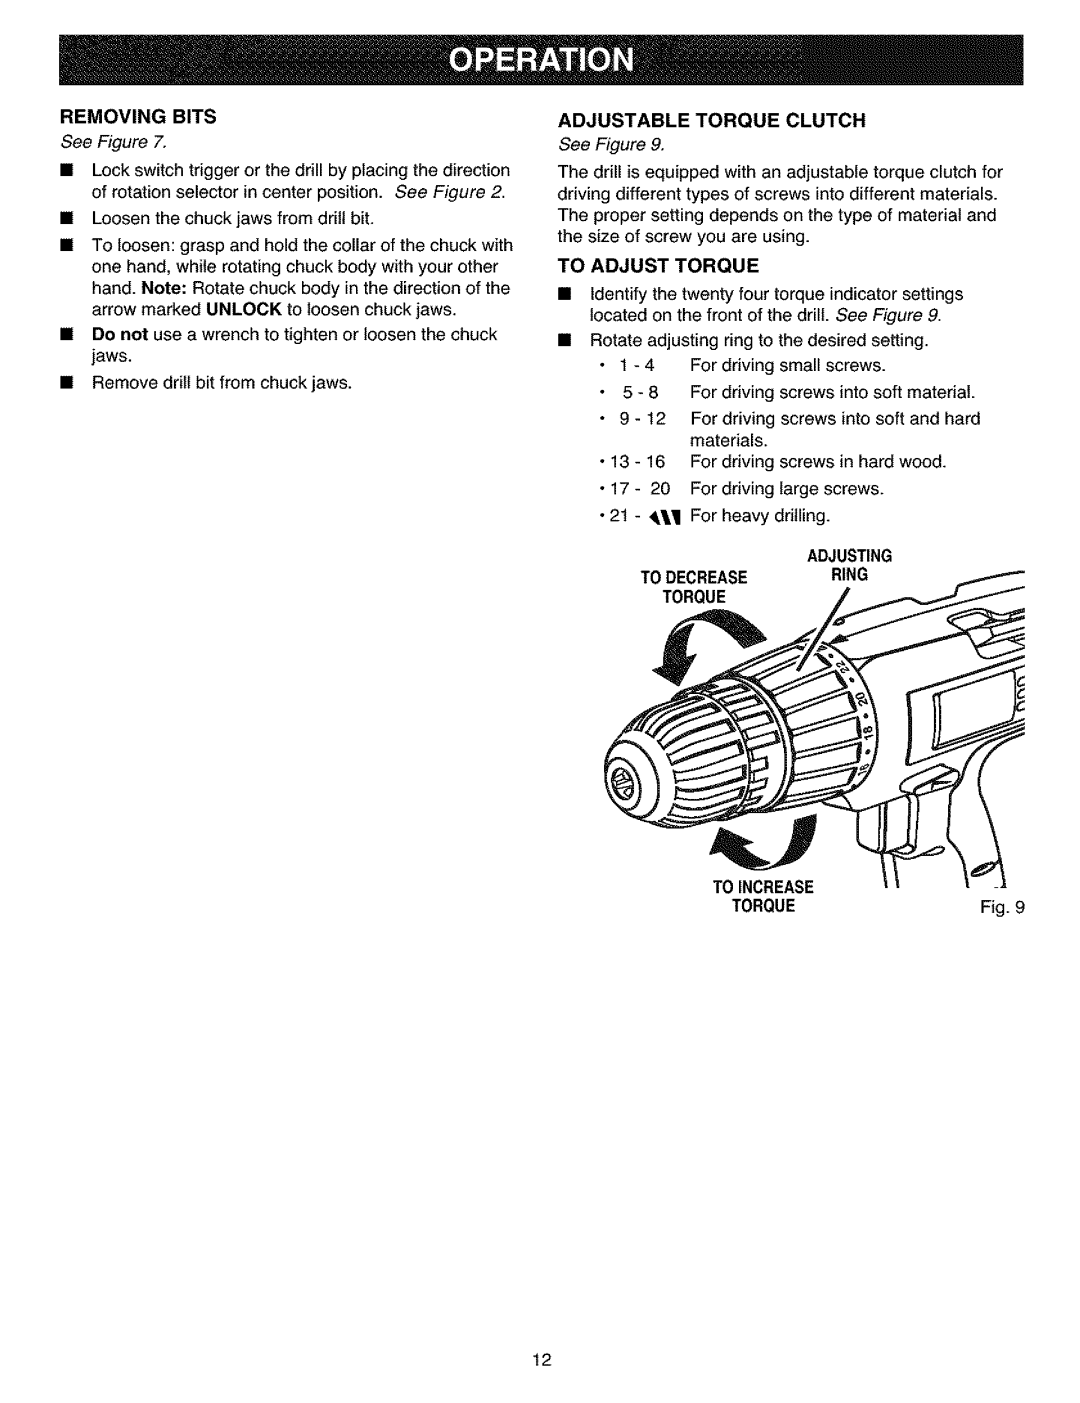 Craftsman 315.11445 manual Removingbits, To Adjust Torque, Adjusting, To Decrease, Ring, To Increase 